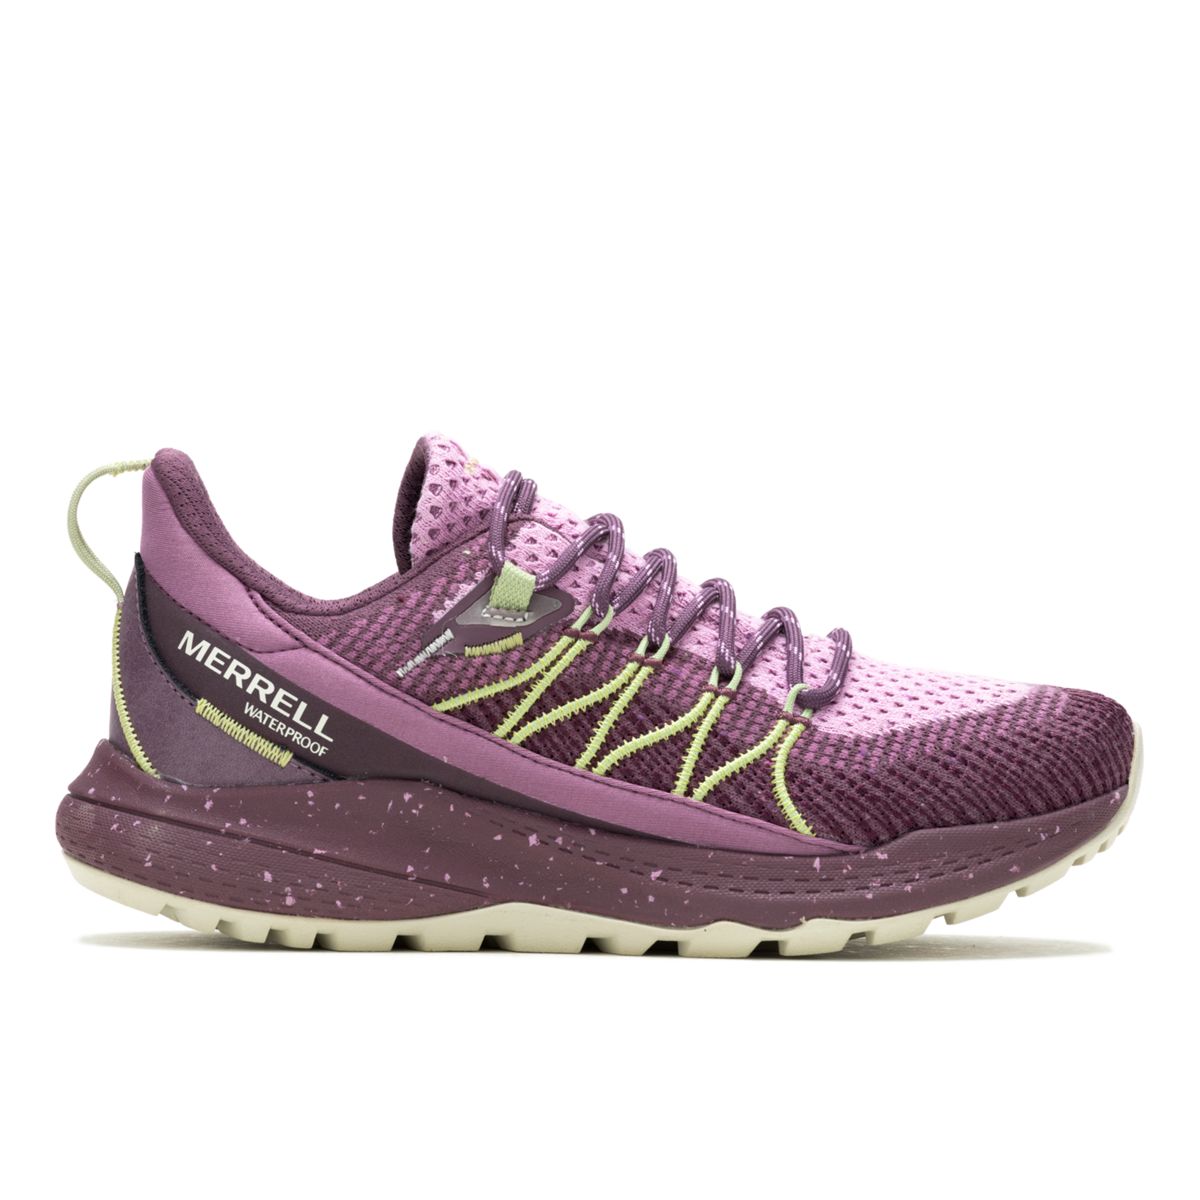 Buy Merrell womens Bravada Waterproof Hiking Shoe, Aluminum, 6 US at